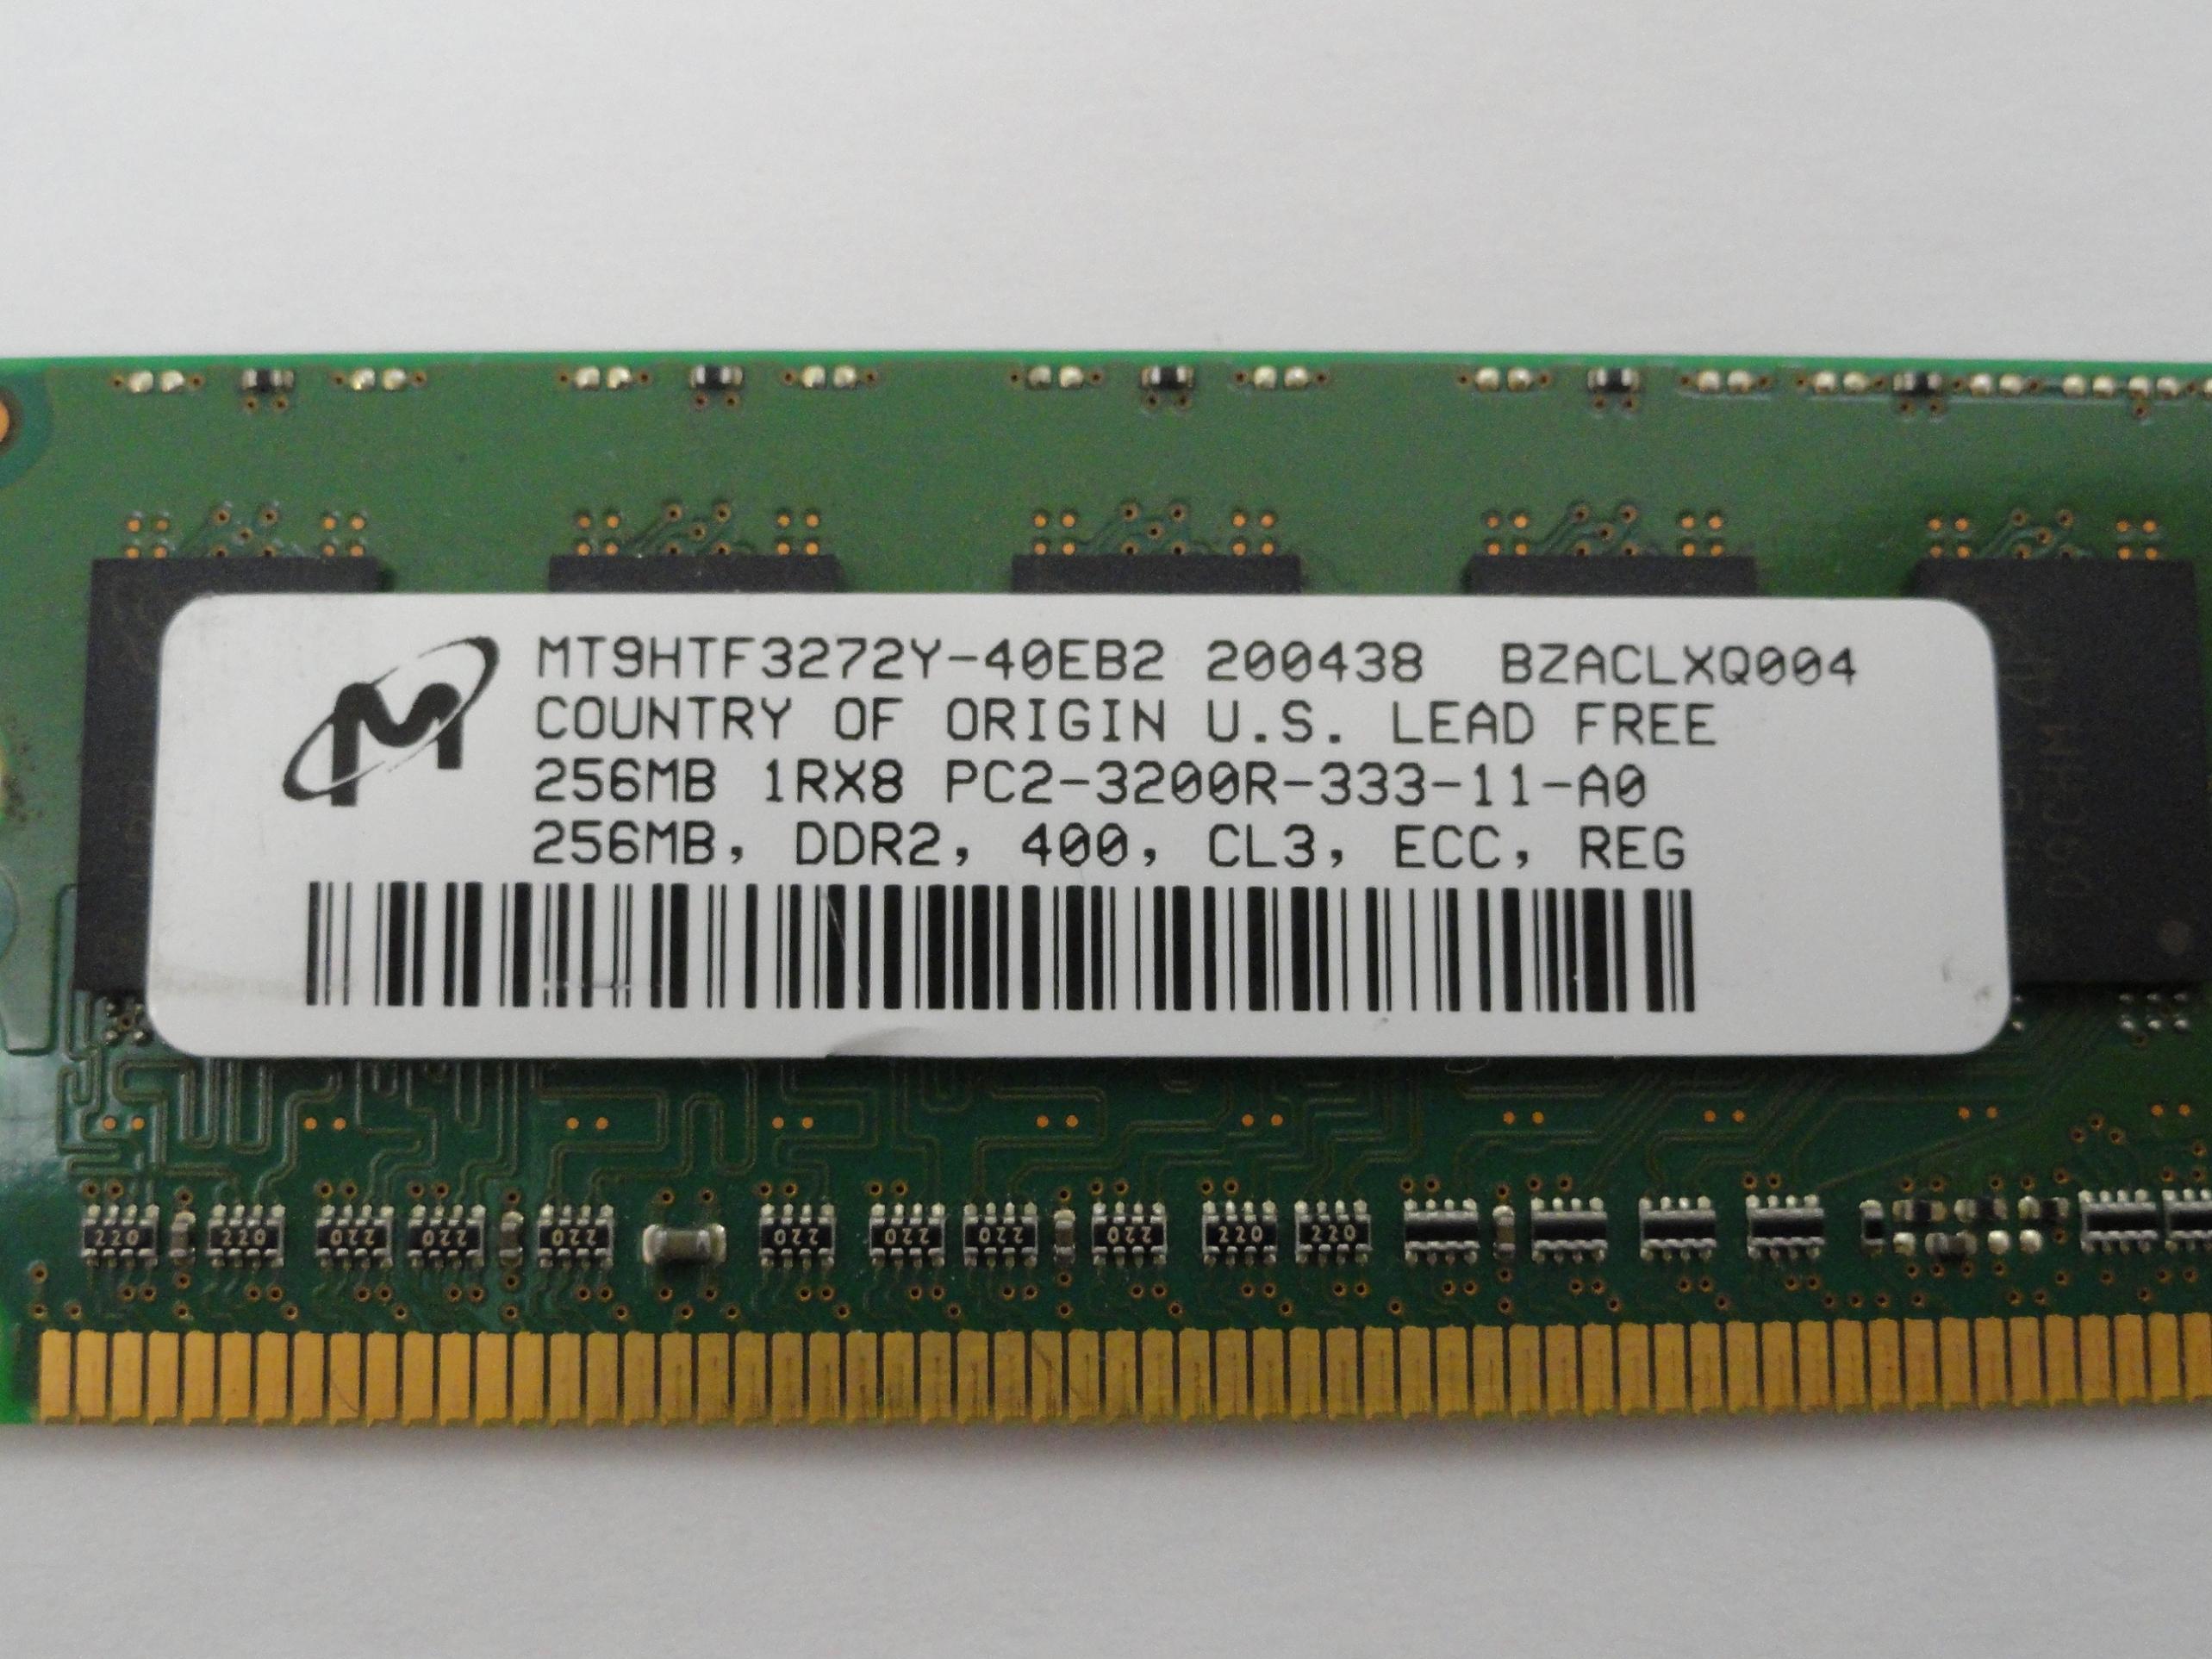 PC2-3200R-333-11-A0 - Micron IBM 256Mb DDR2 400MHz 1RX8 PC2-3200R CL3 ECC Reg 240 Pin RAM - Refurbished